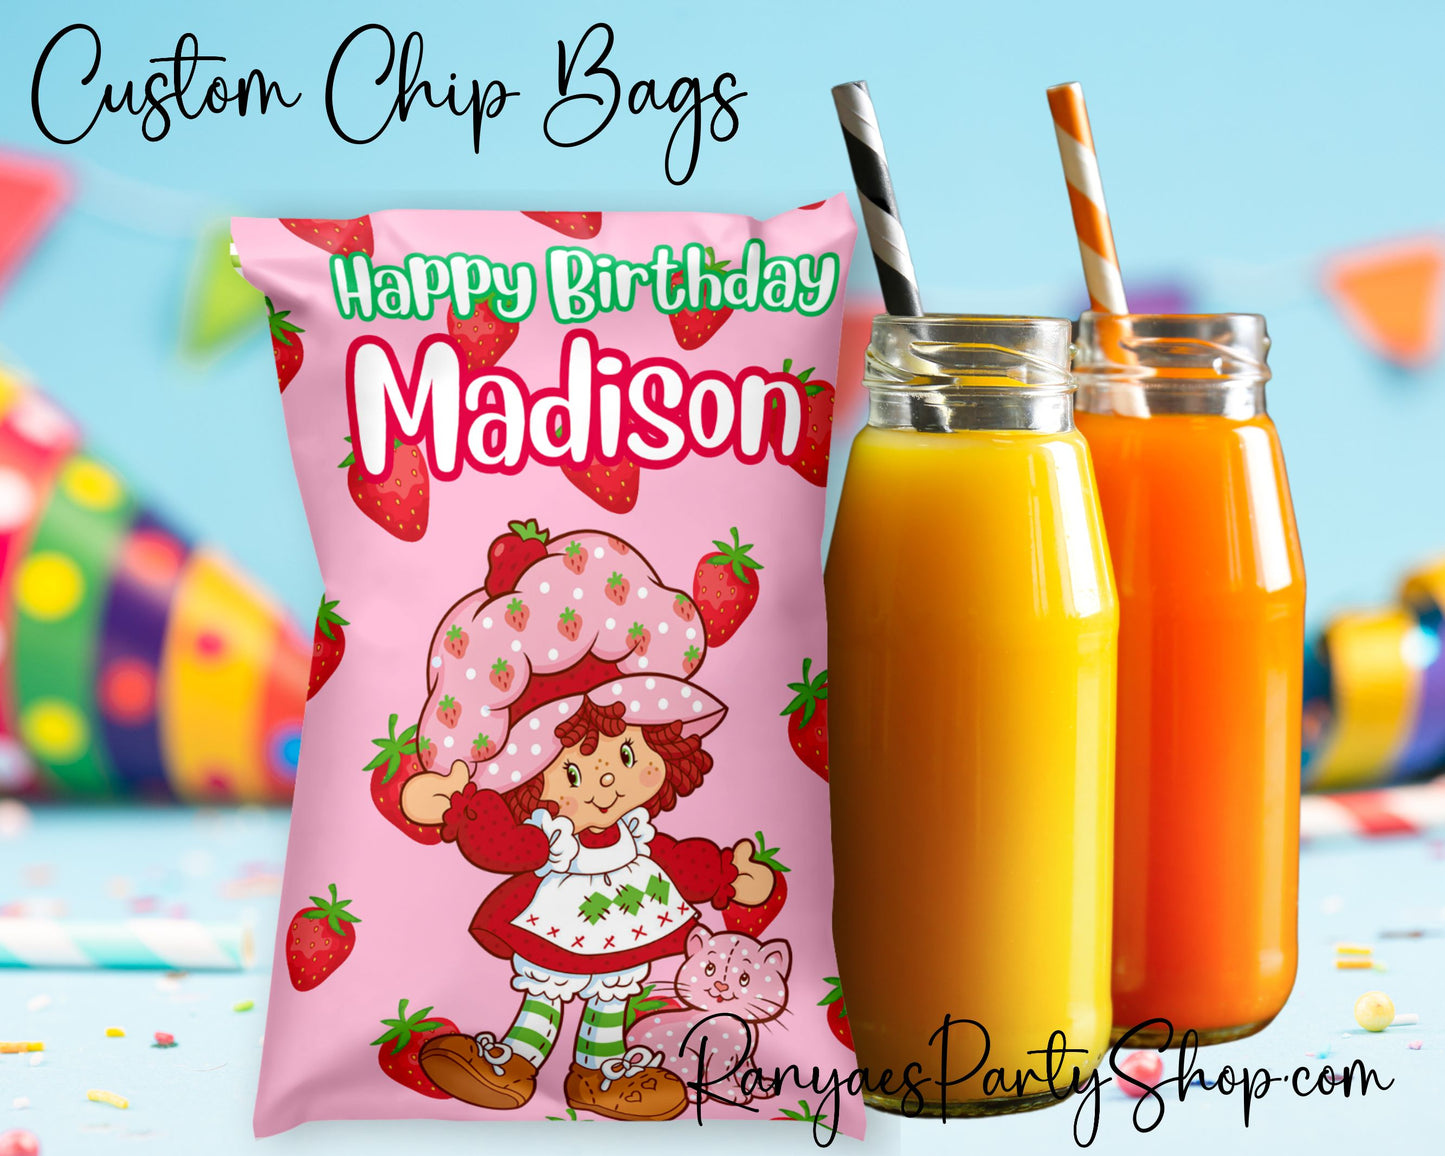 Strawberry Shortcake Chip Bag Favors | Custom Chip Bags | Custom Birthday Chip Bags | Strawberry Shortcake Chip Bags